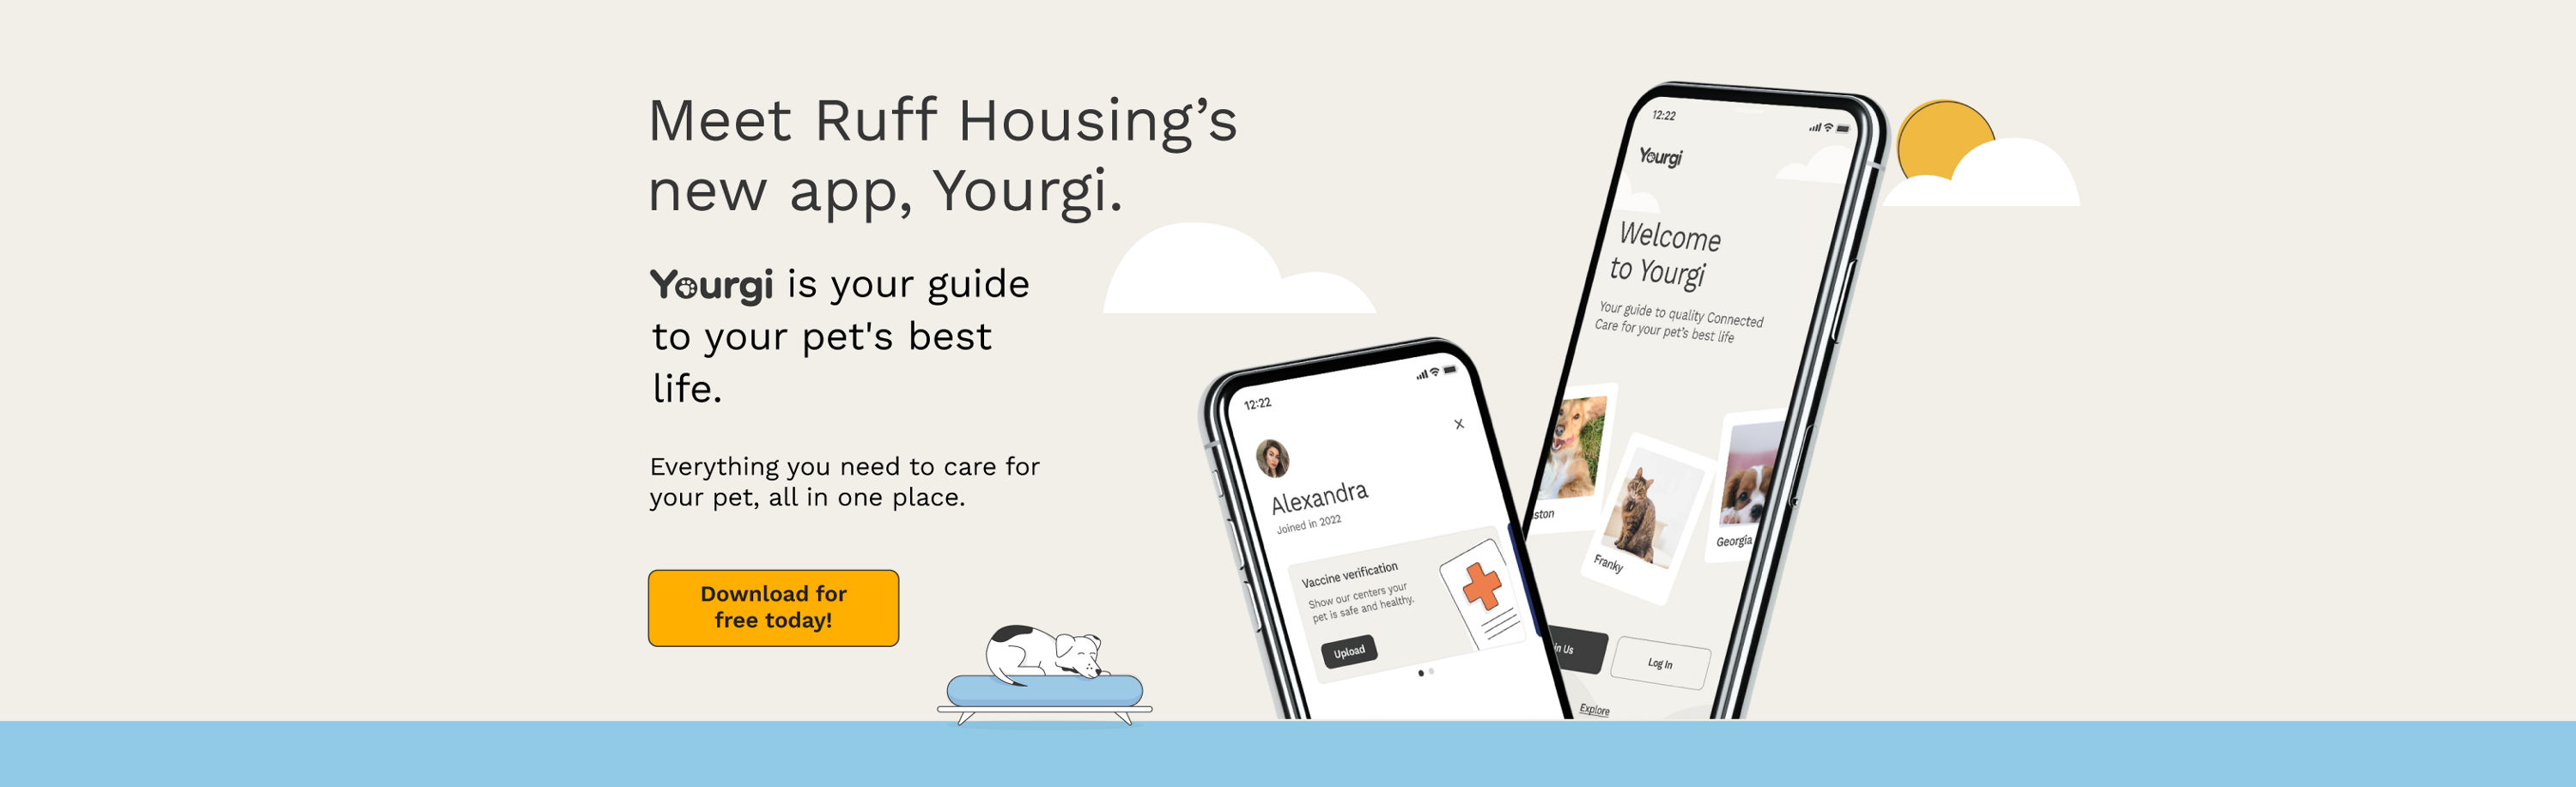 Meet Ruff Housing's new app, Yourgi.